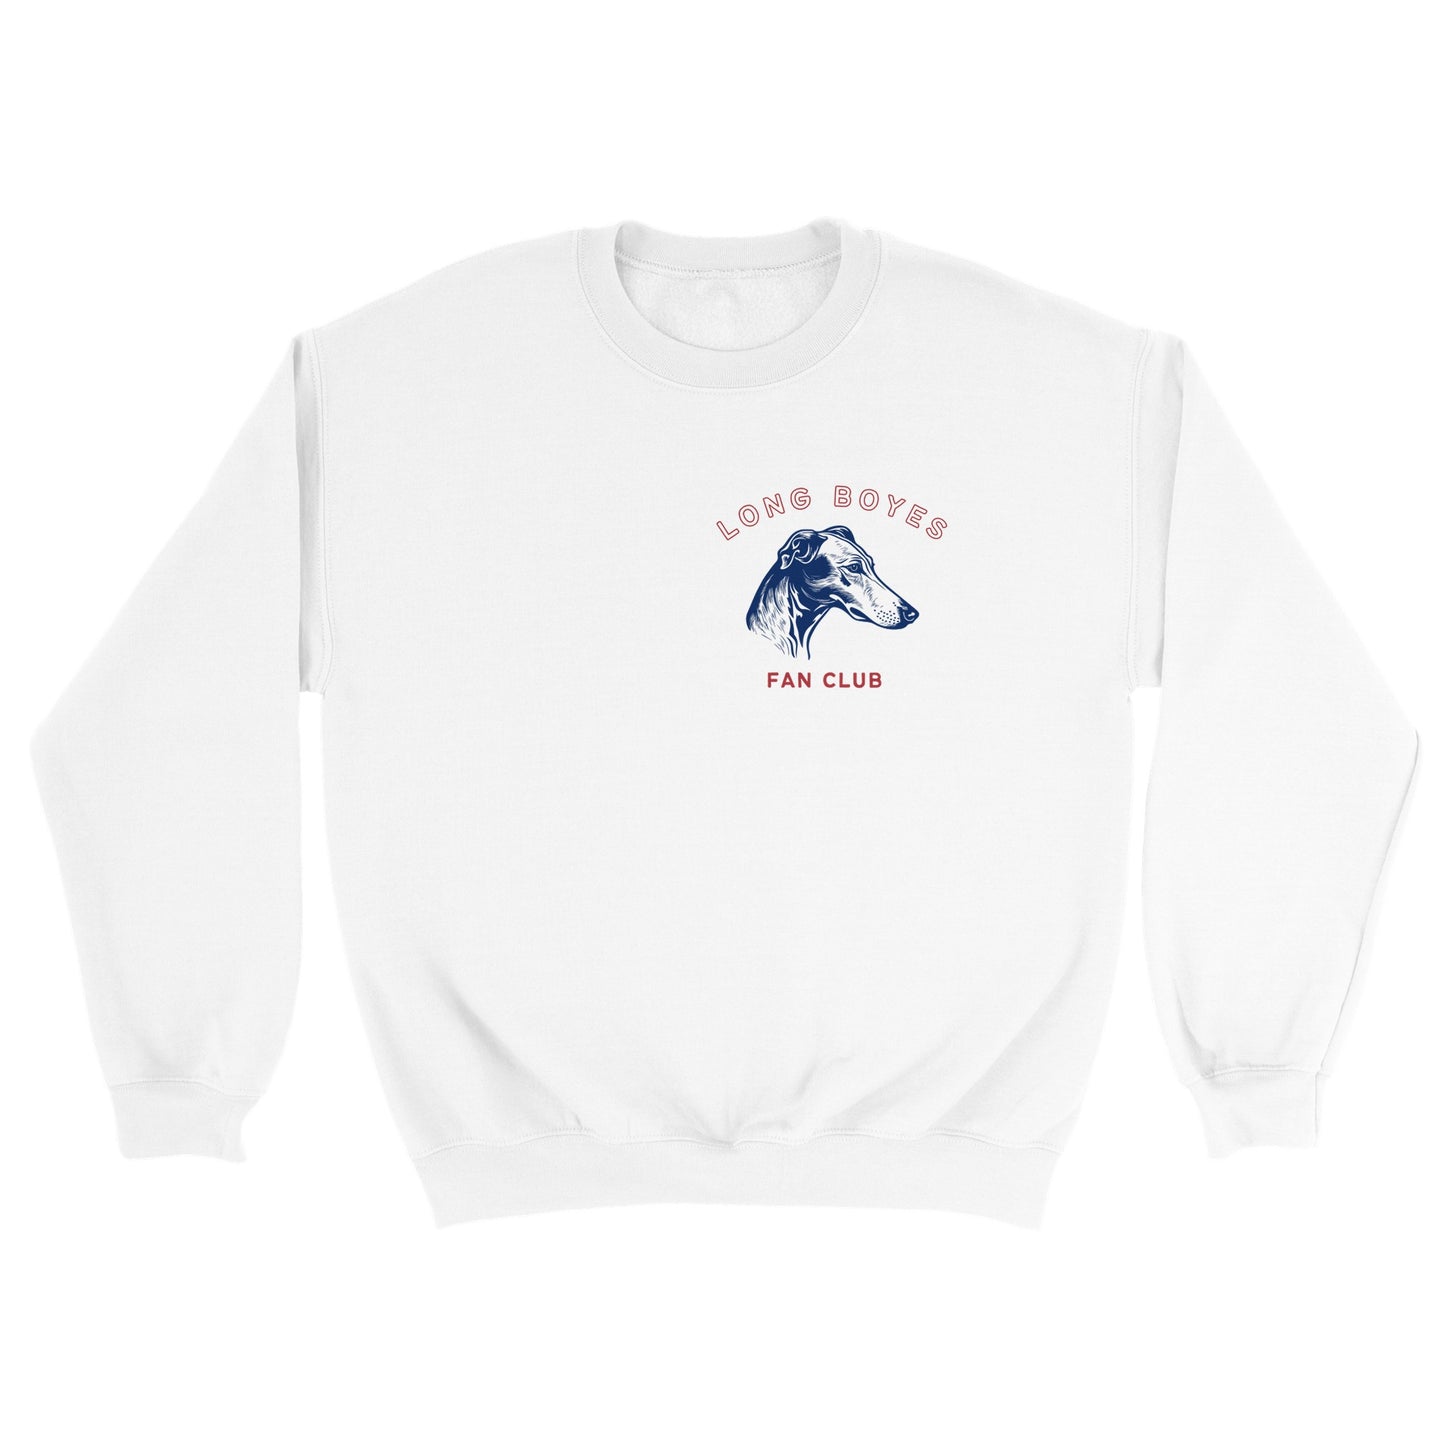 Longboye Emblem Crewneck Sweatshirt